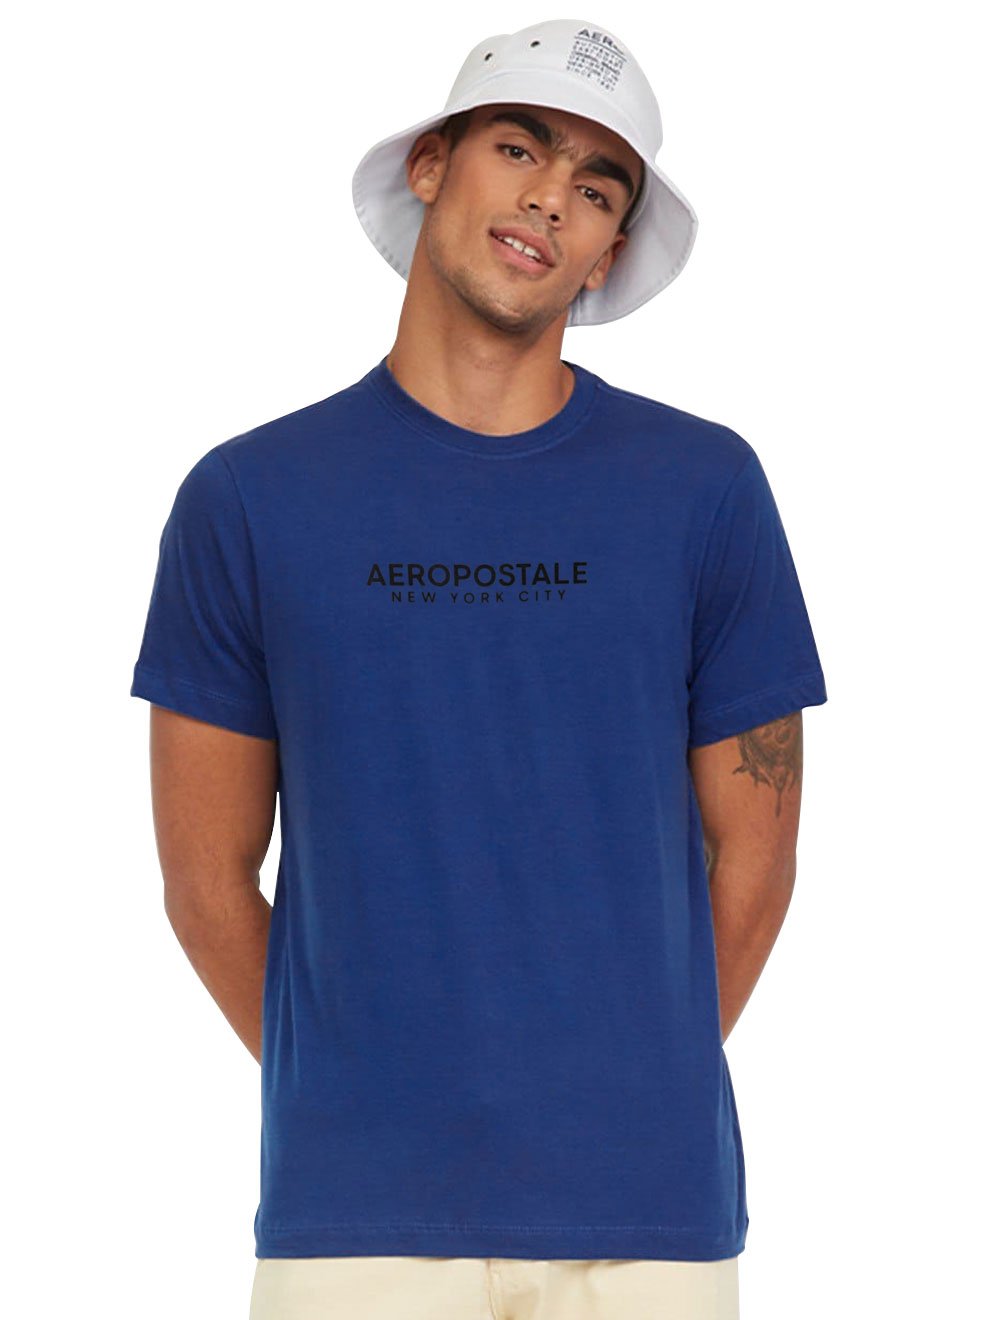 Camiseta Aeropostale Masculina Colors New York City Azul Royal